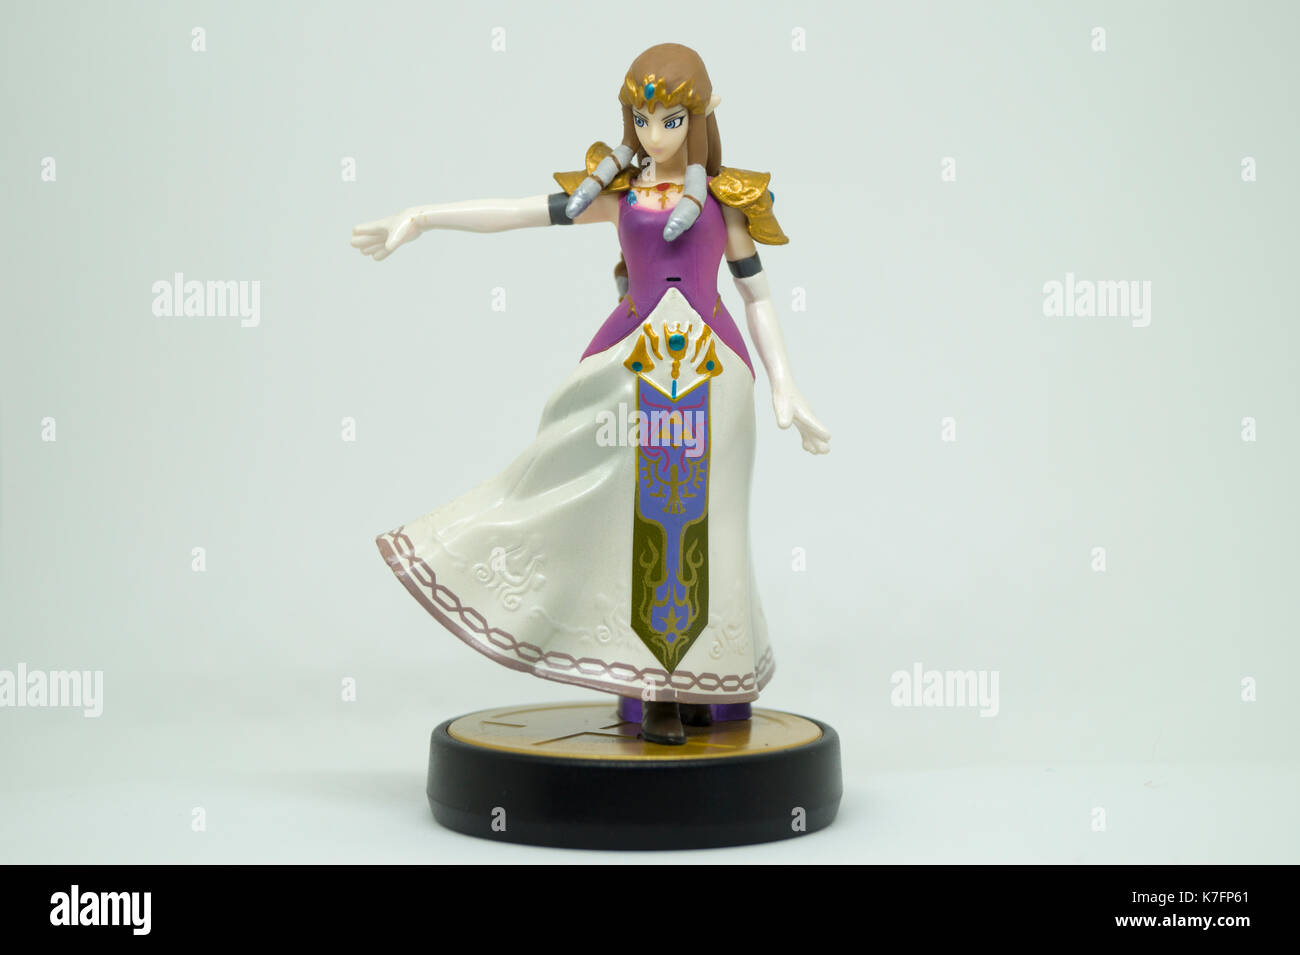 Nintendo Super Smash Bros Amiibo Collection Figure Zelda Stock Photo - Alamy